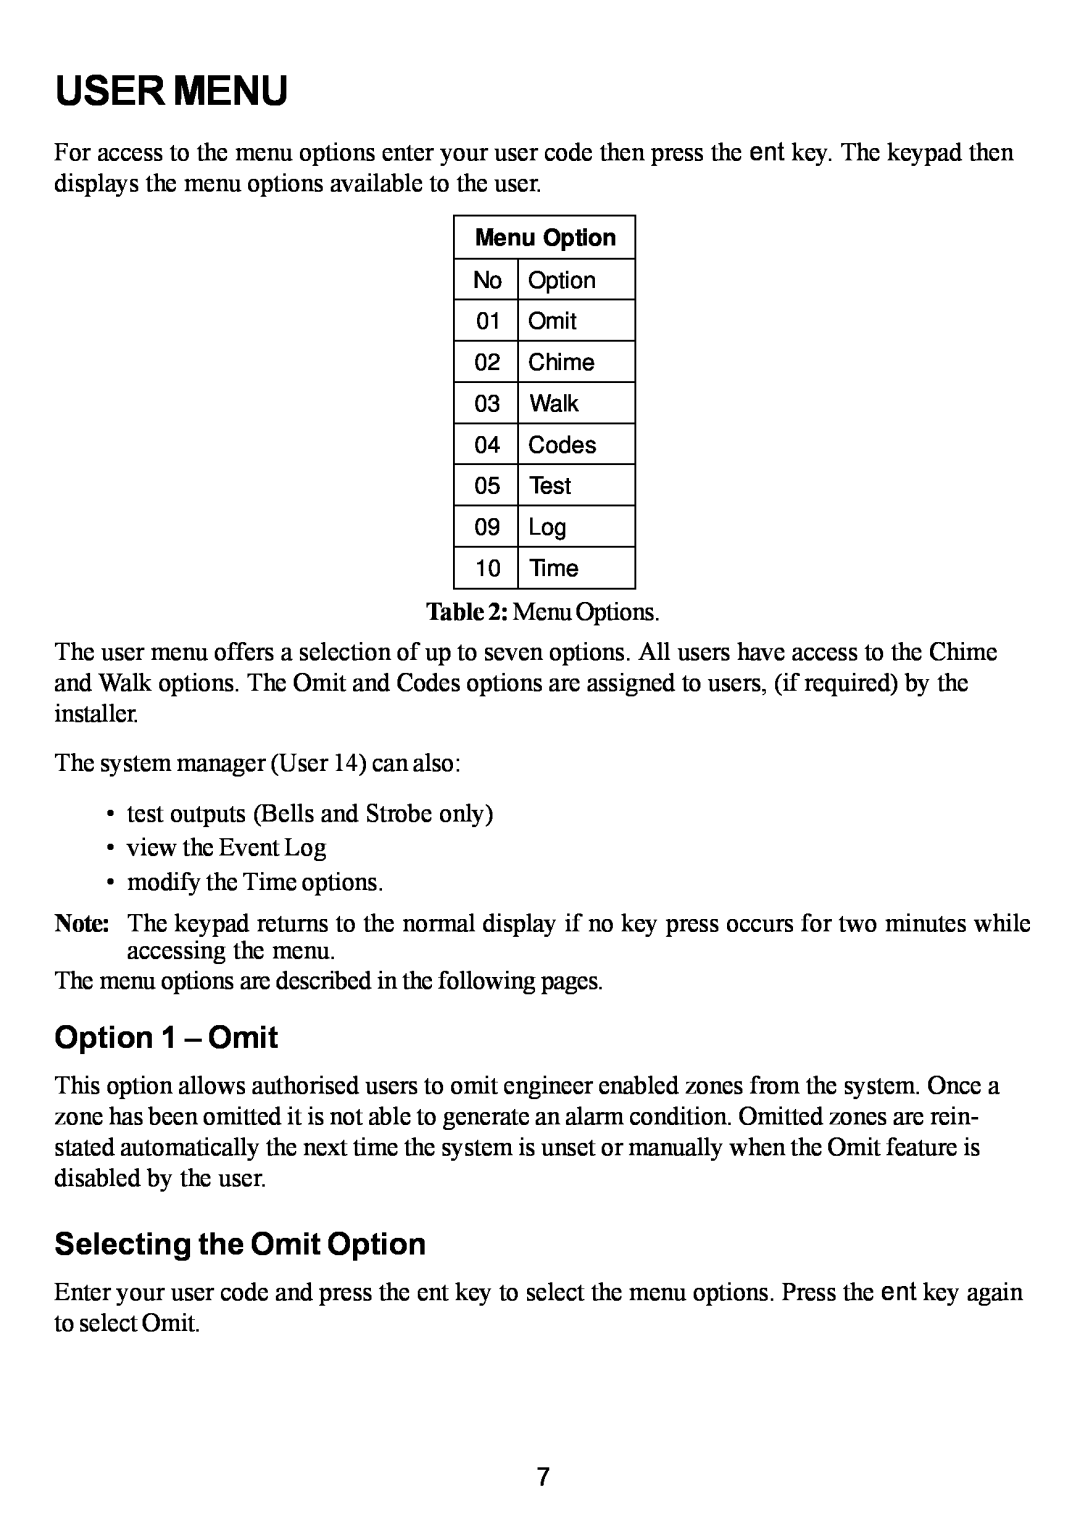 Honeywell 16 Plus manual User Menu, Option 1 - Omit, Selecting the Omit Option 